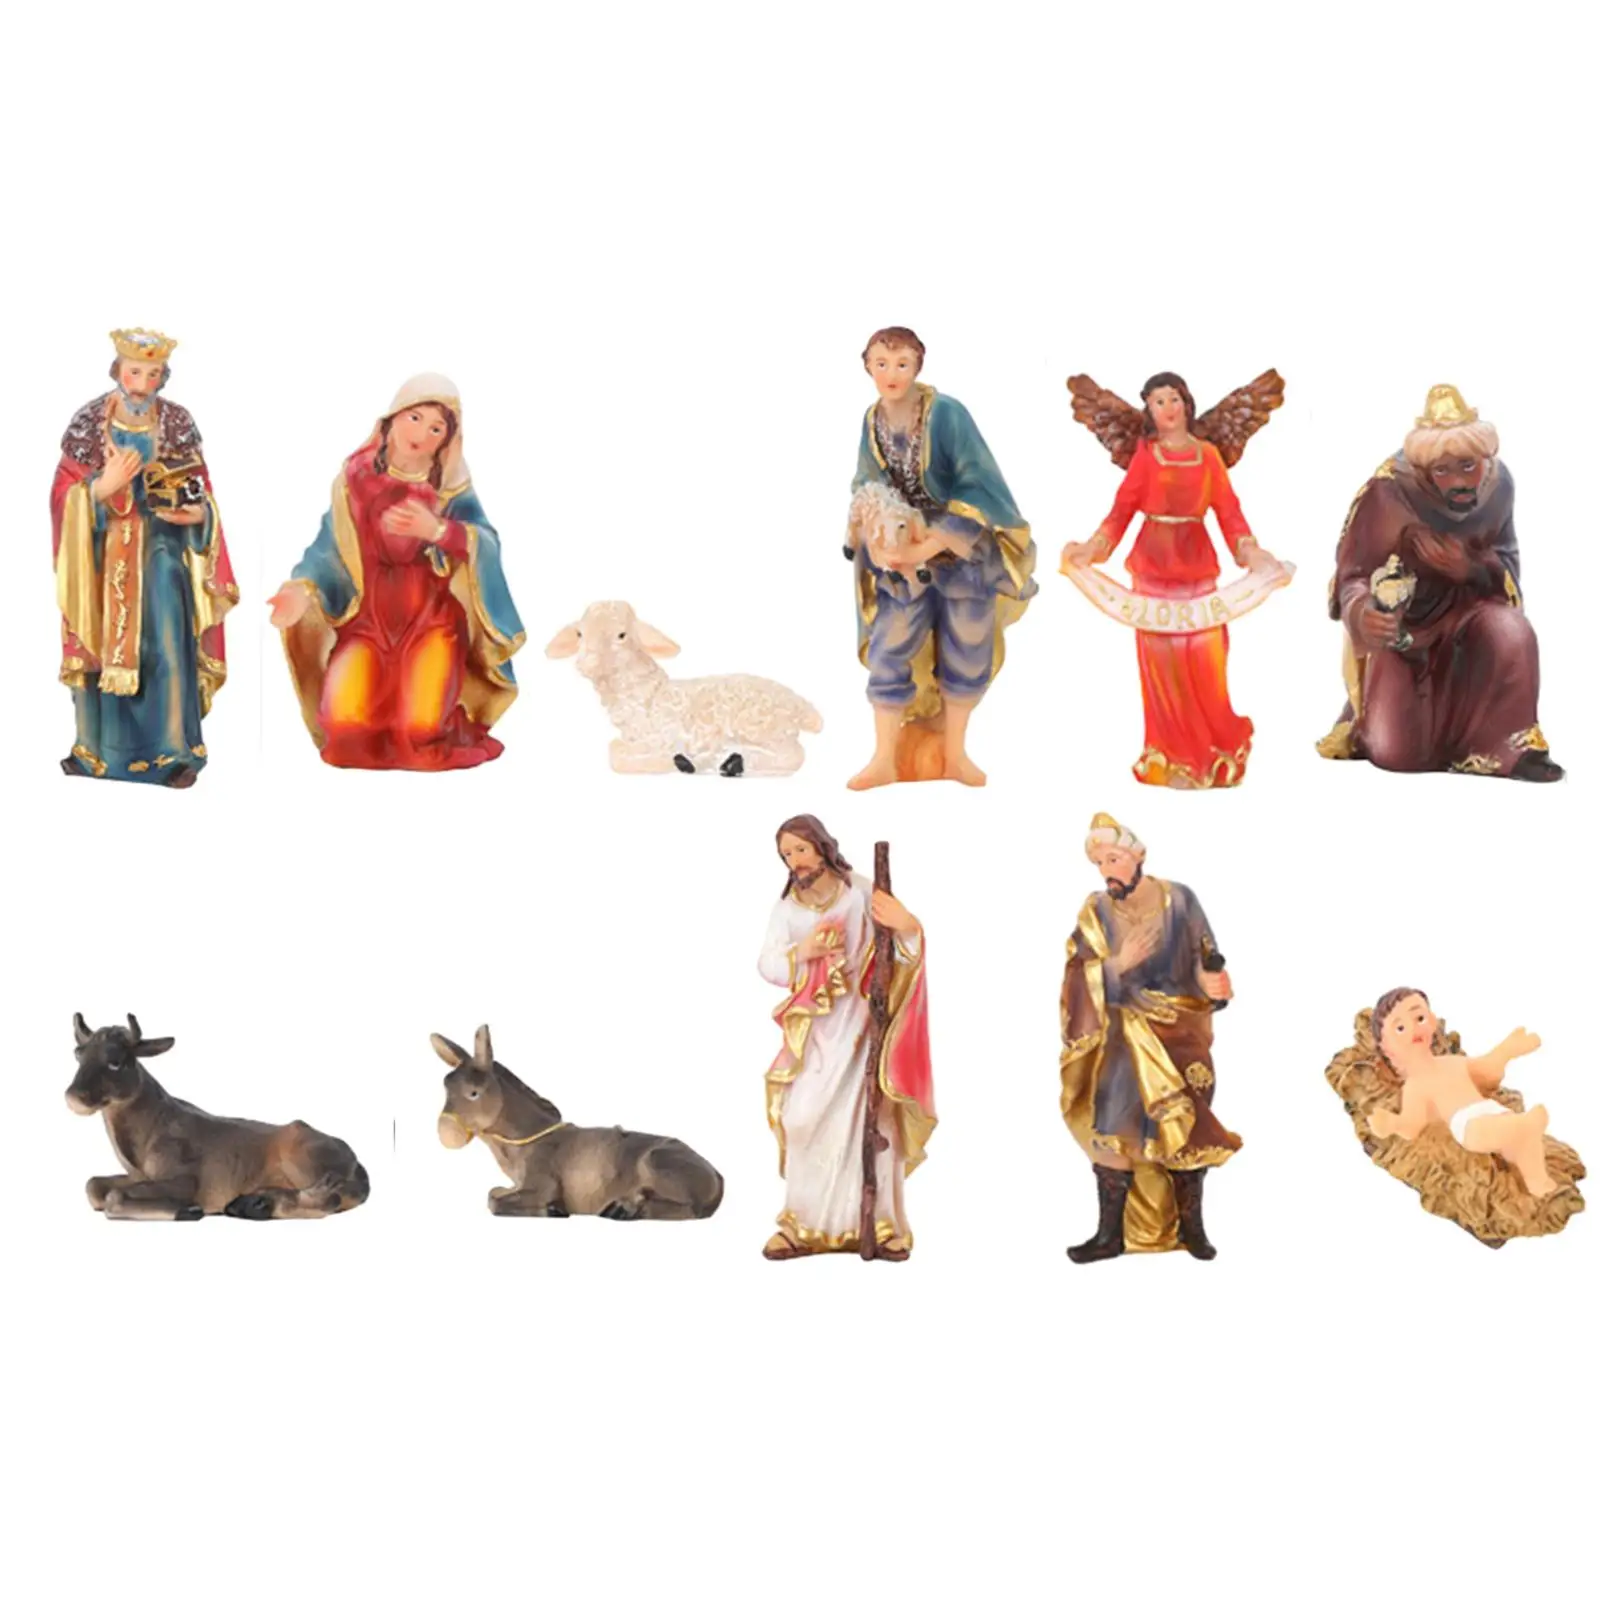 11 Pieces Nativity Scene Figurines Christmas Art for Table Centerpiece